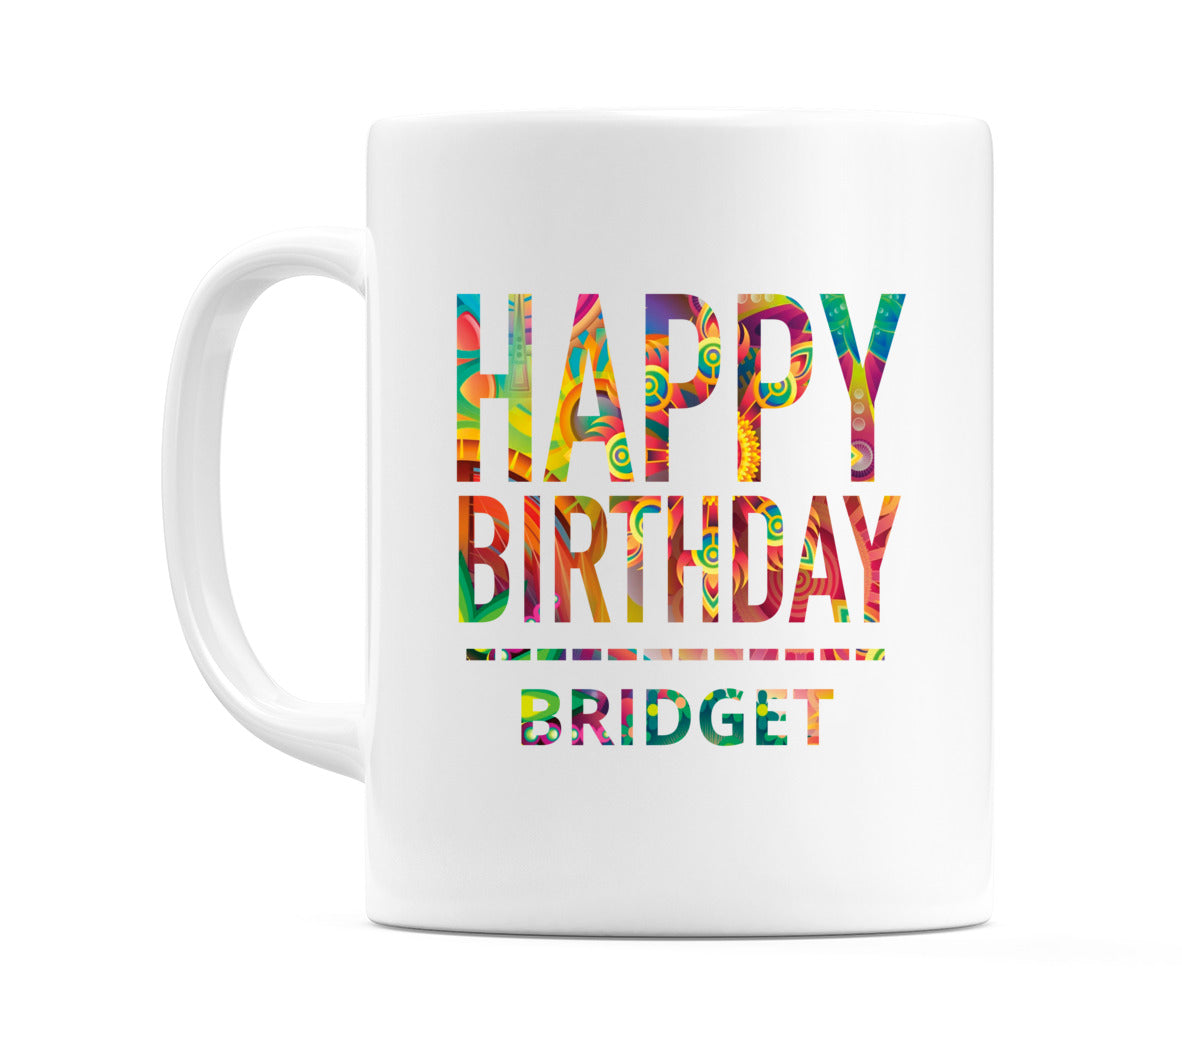 Happy Birthday Bridget (Tie Dye Effect) Mug Cup by WeDoMugs